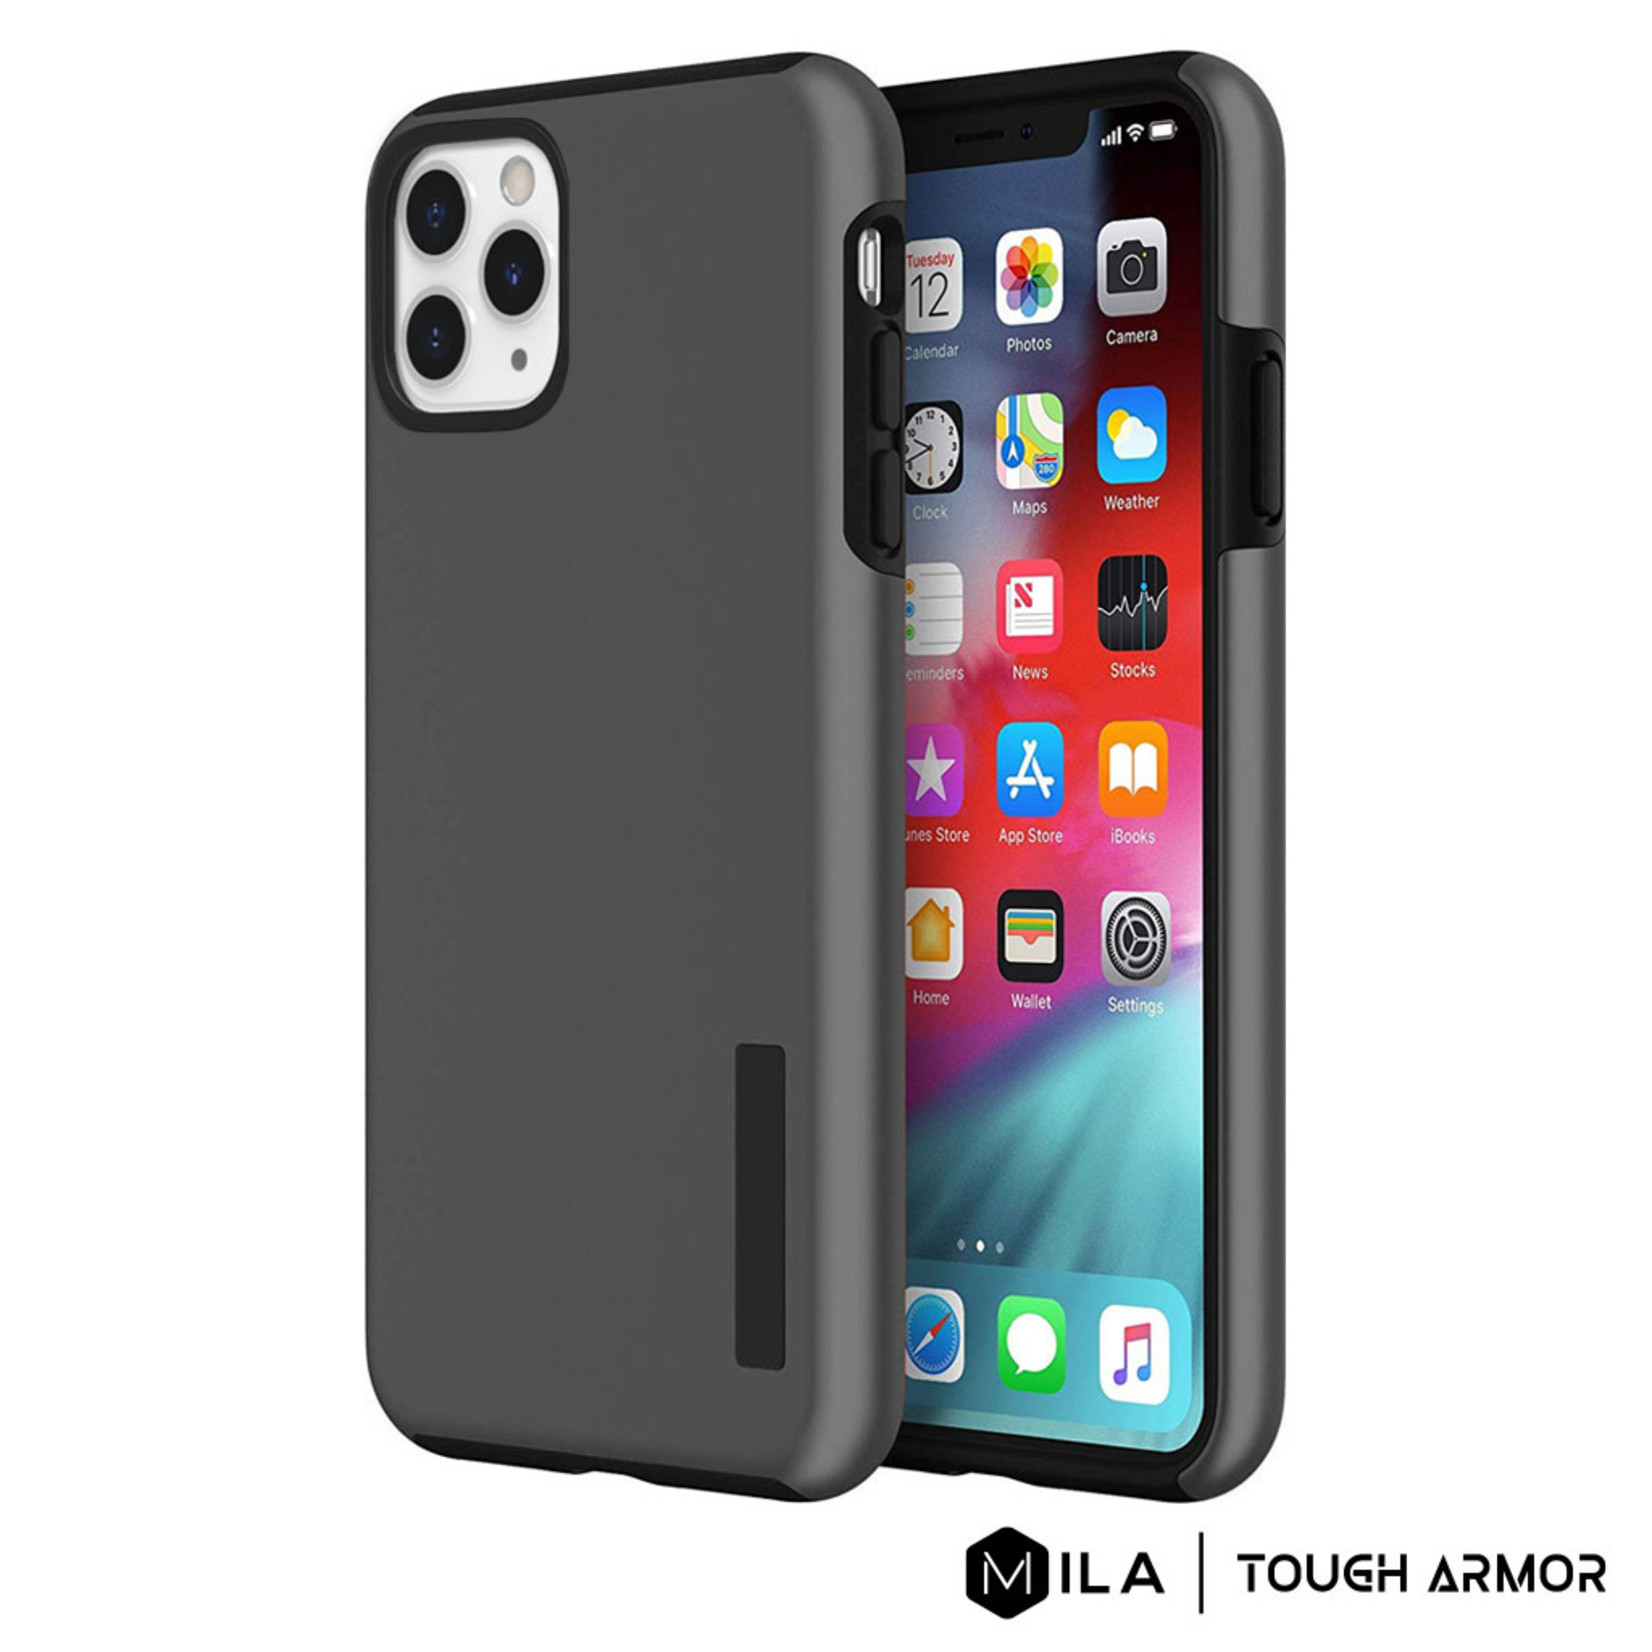 MILA | Tough Armor Case for iPhone 11 Pro